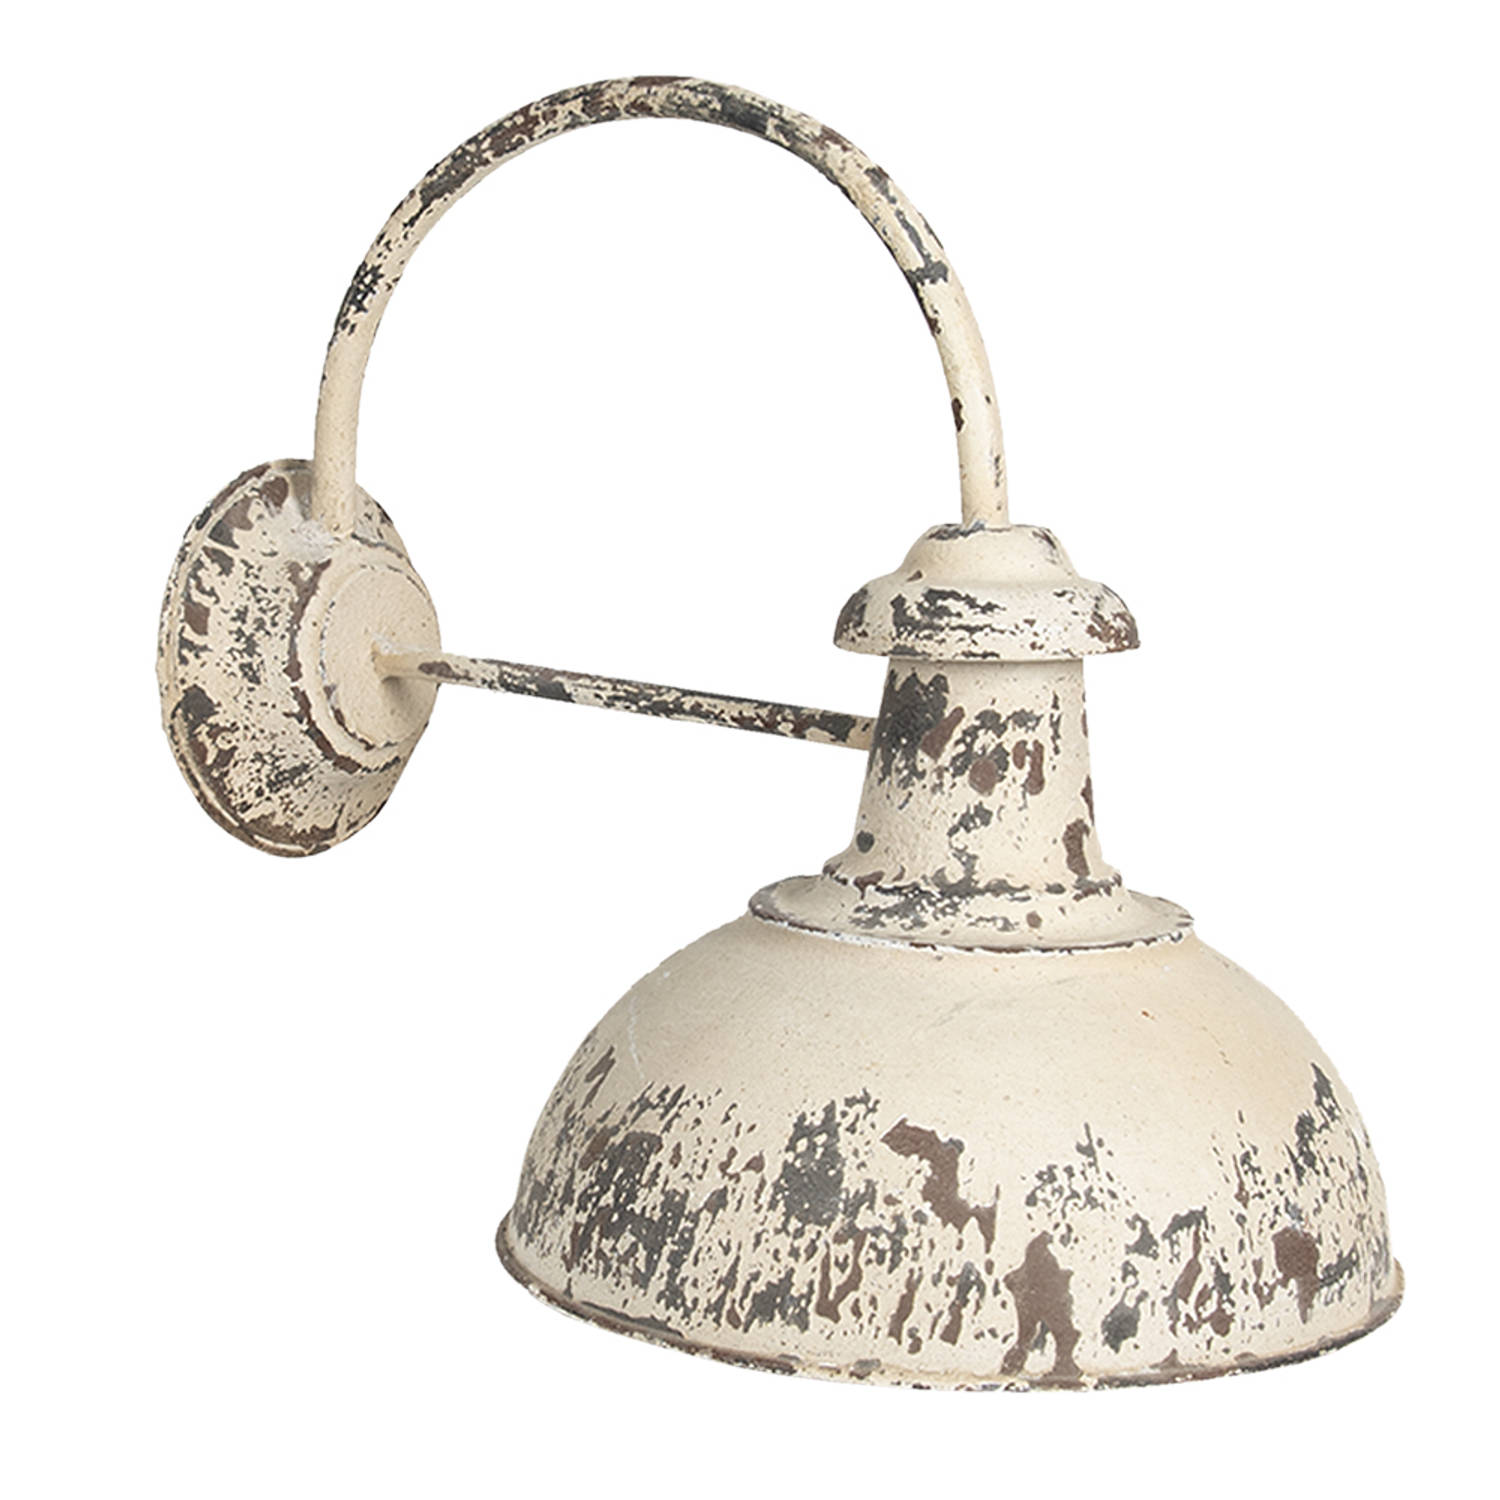 HAES DECO Wandlamp Industrial Vintage-Retro Lamp, 47x30x40 cm Wit Metaal Ronde Muurlamp, Sfeerlamp